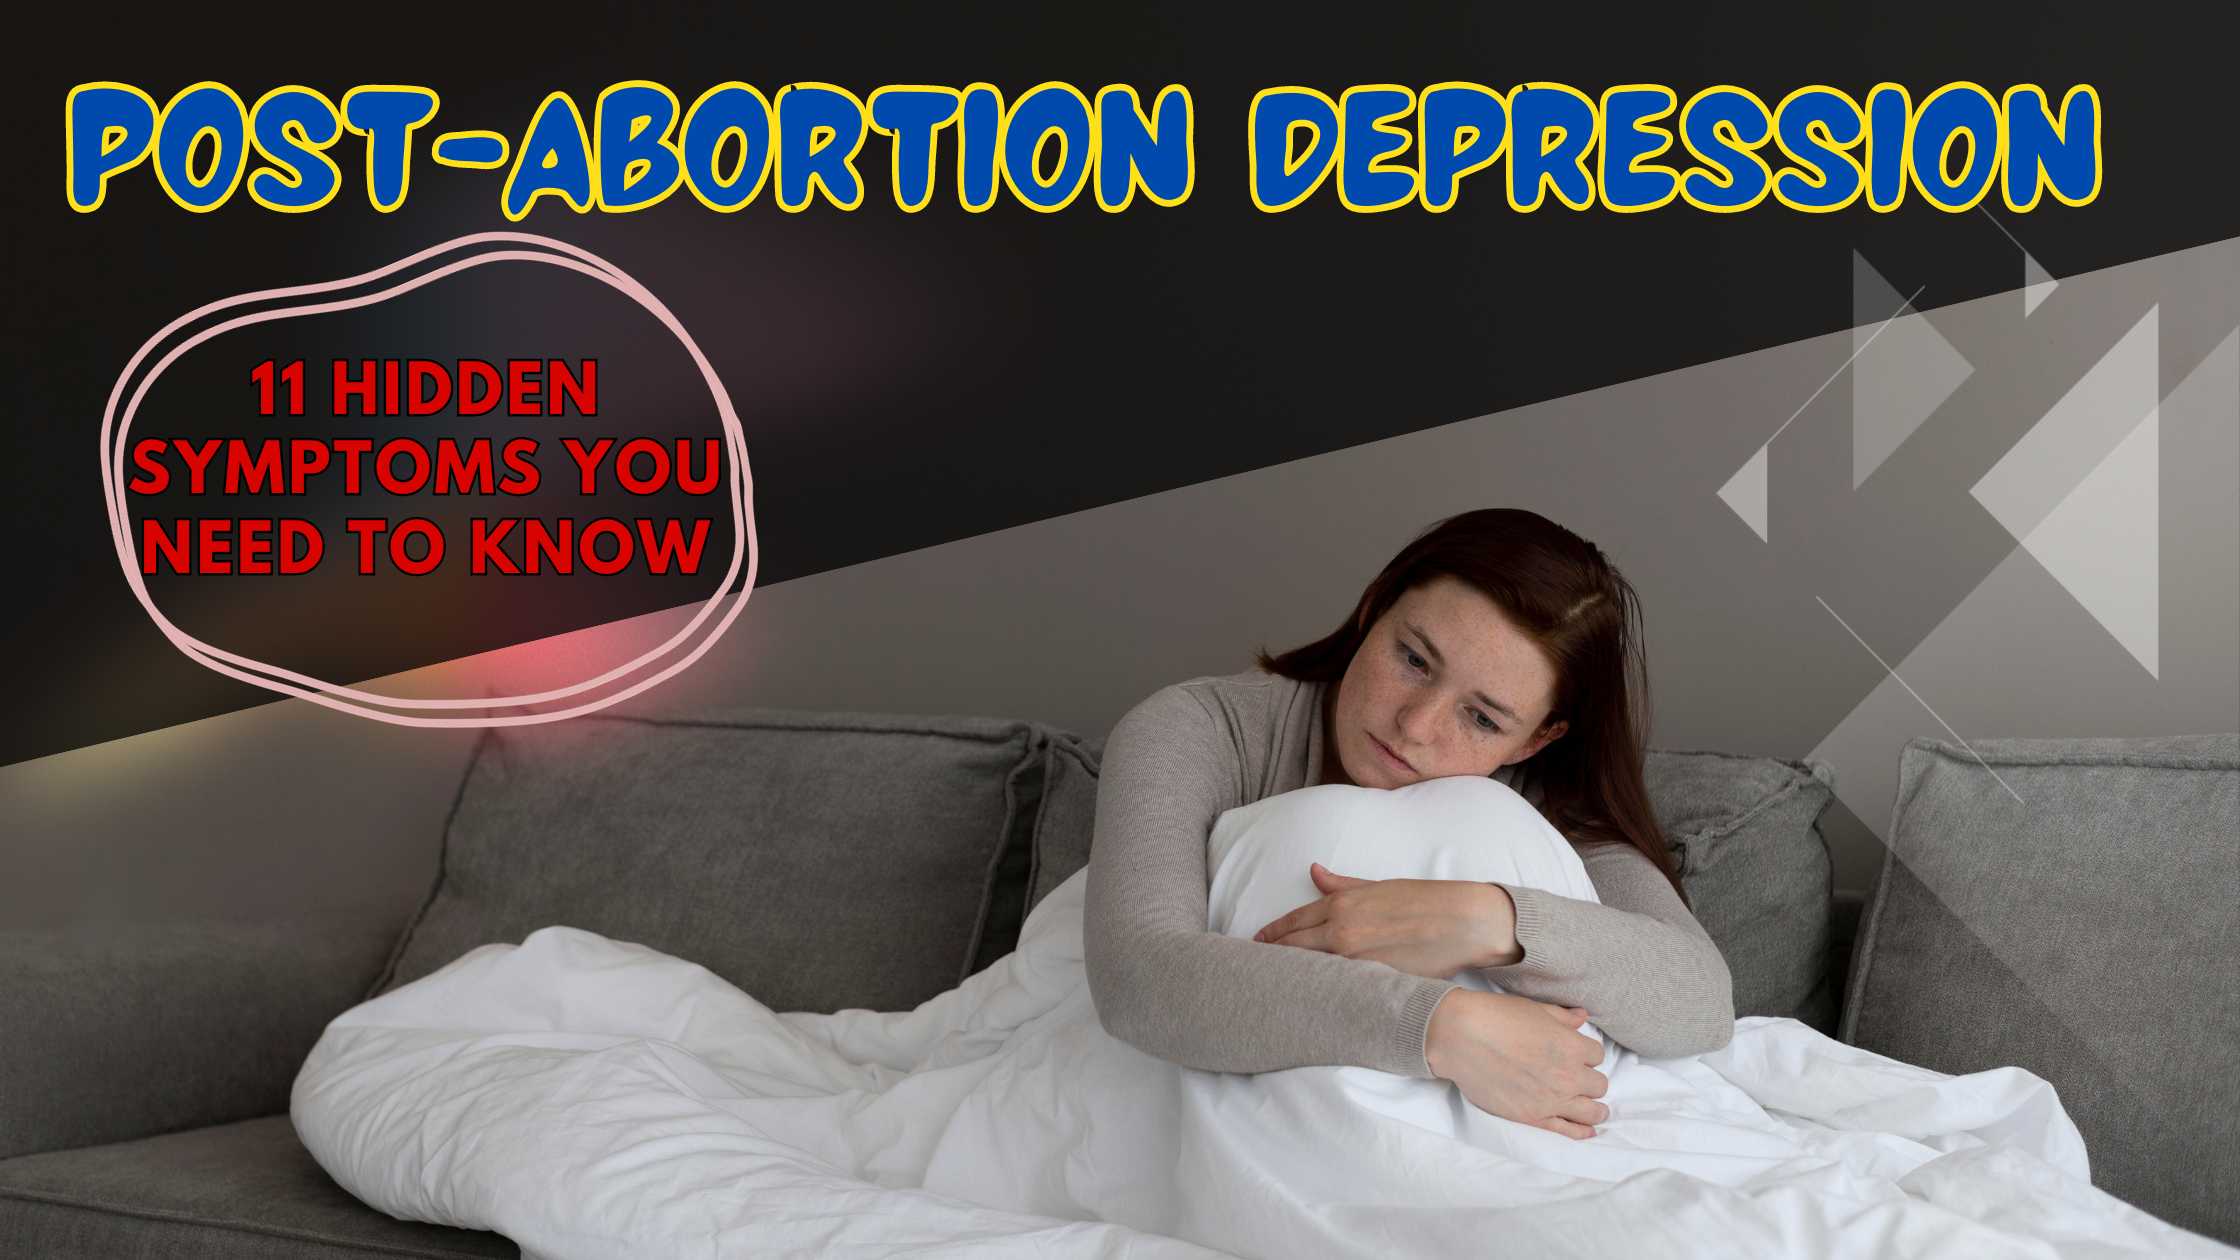 Abortion depression symptoms